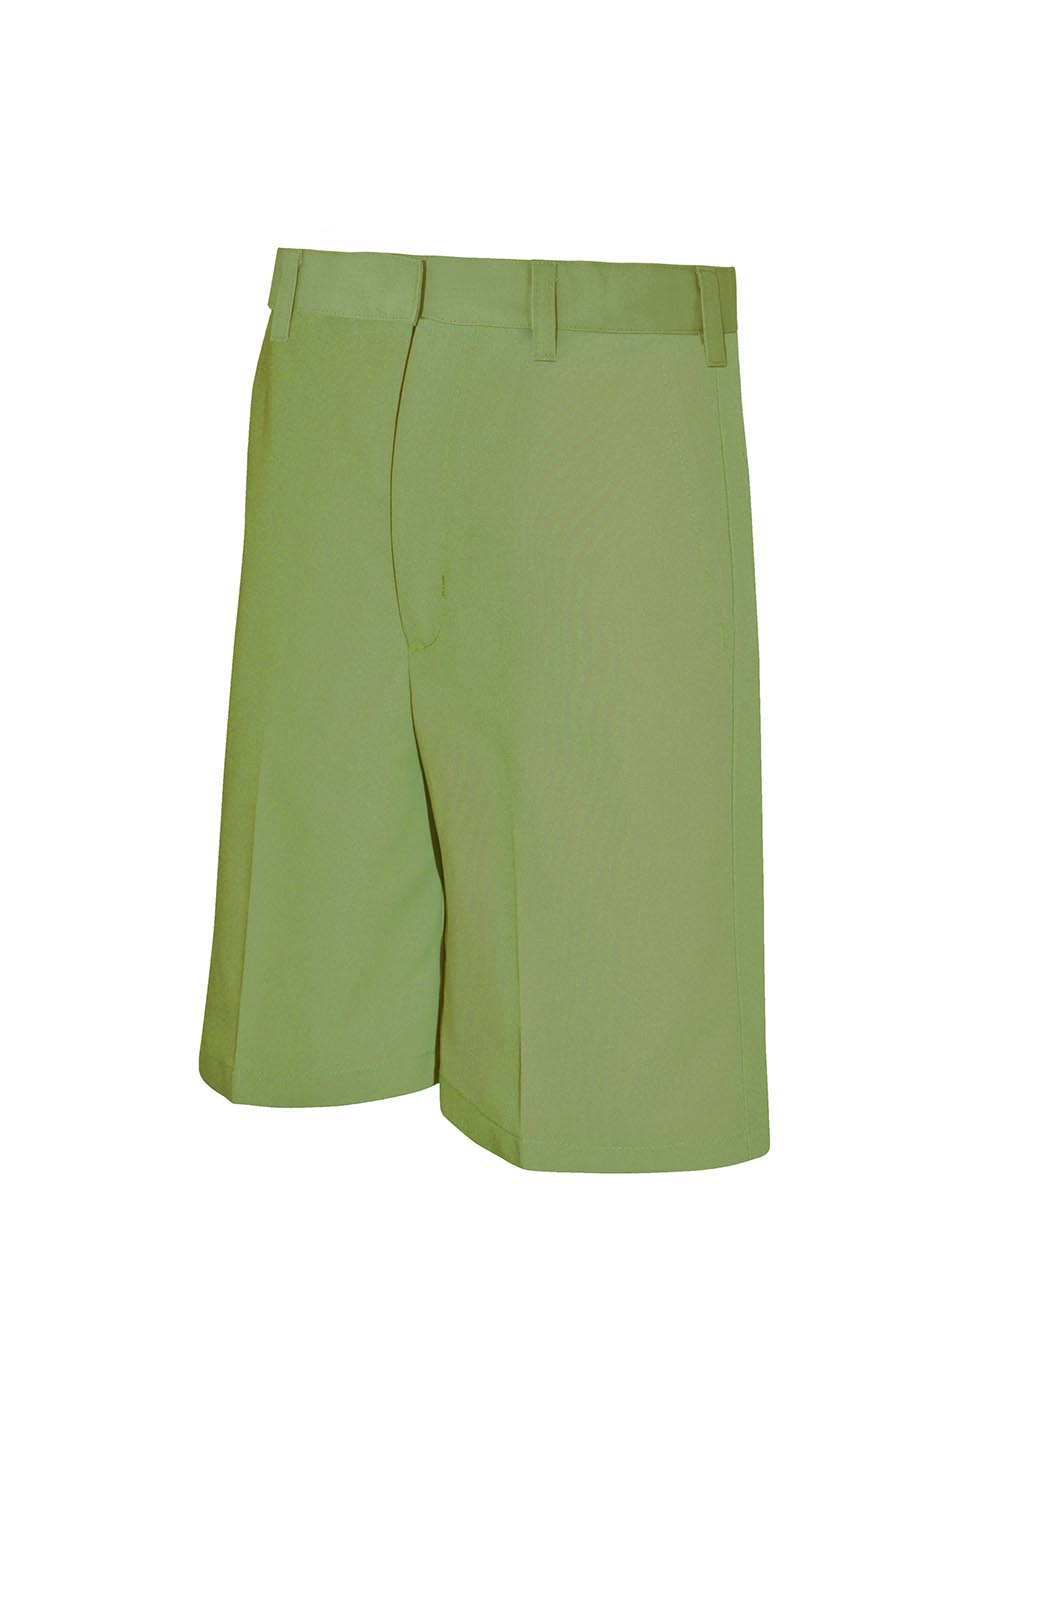 A+ Boy's Flat Front Twill Shorts (adjustable waist - Queensboro